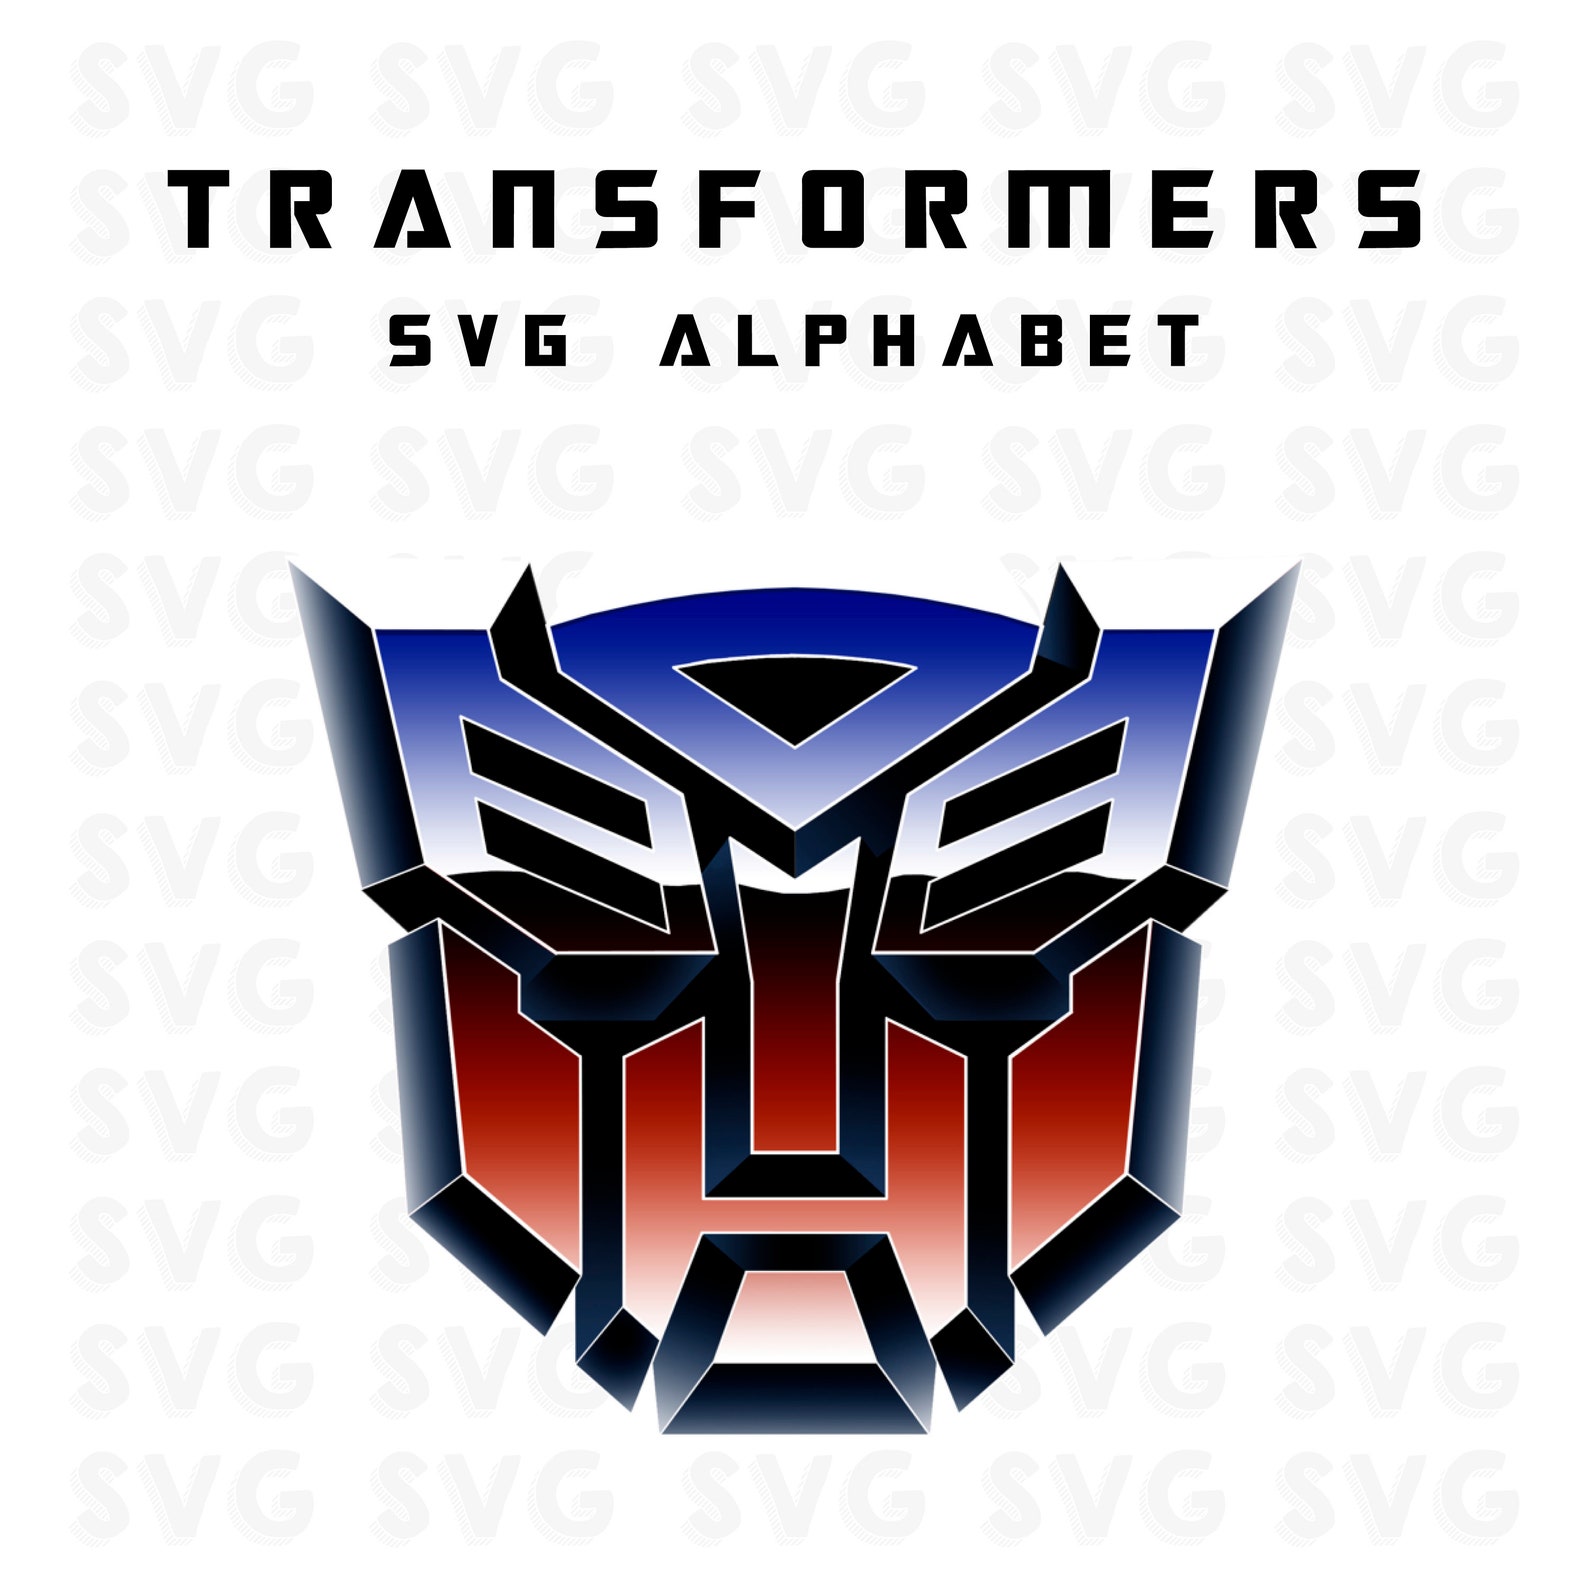 Transformers Alphabet SVG Font Transformers Transformers image 1.